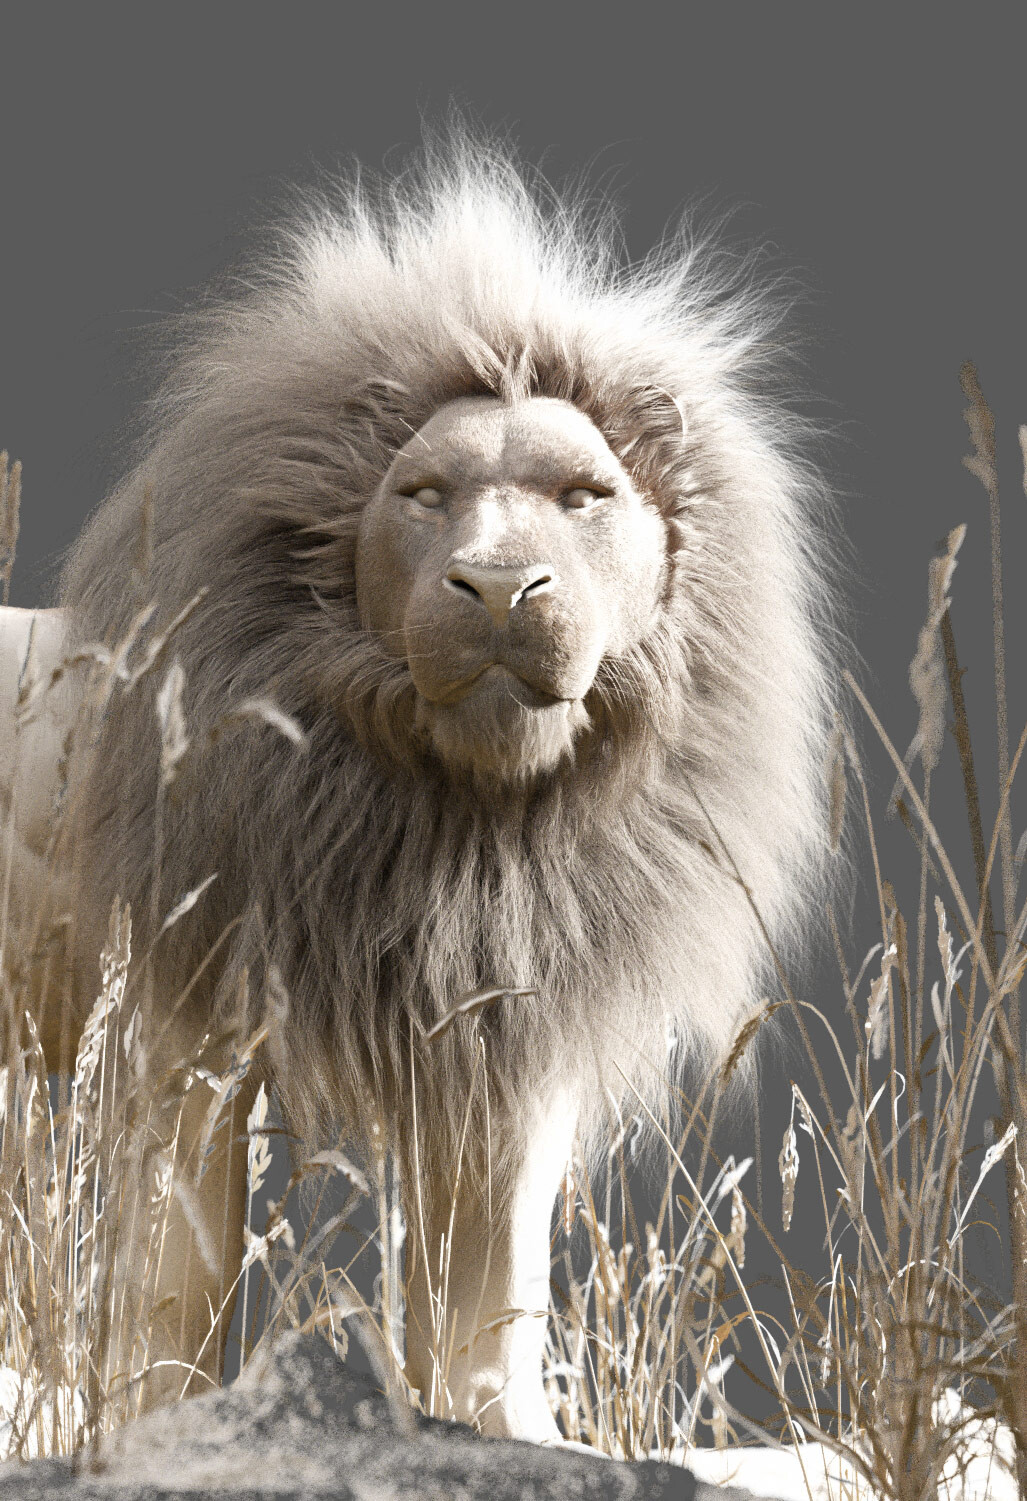 Lion Development